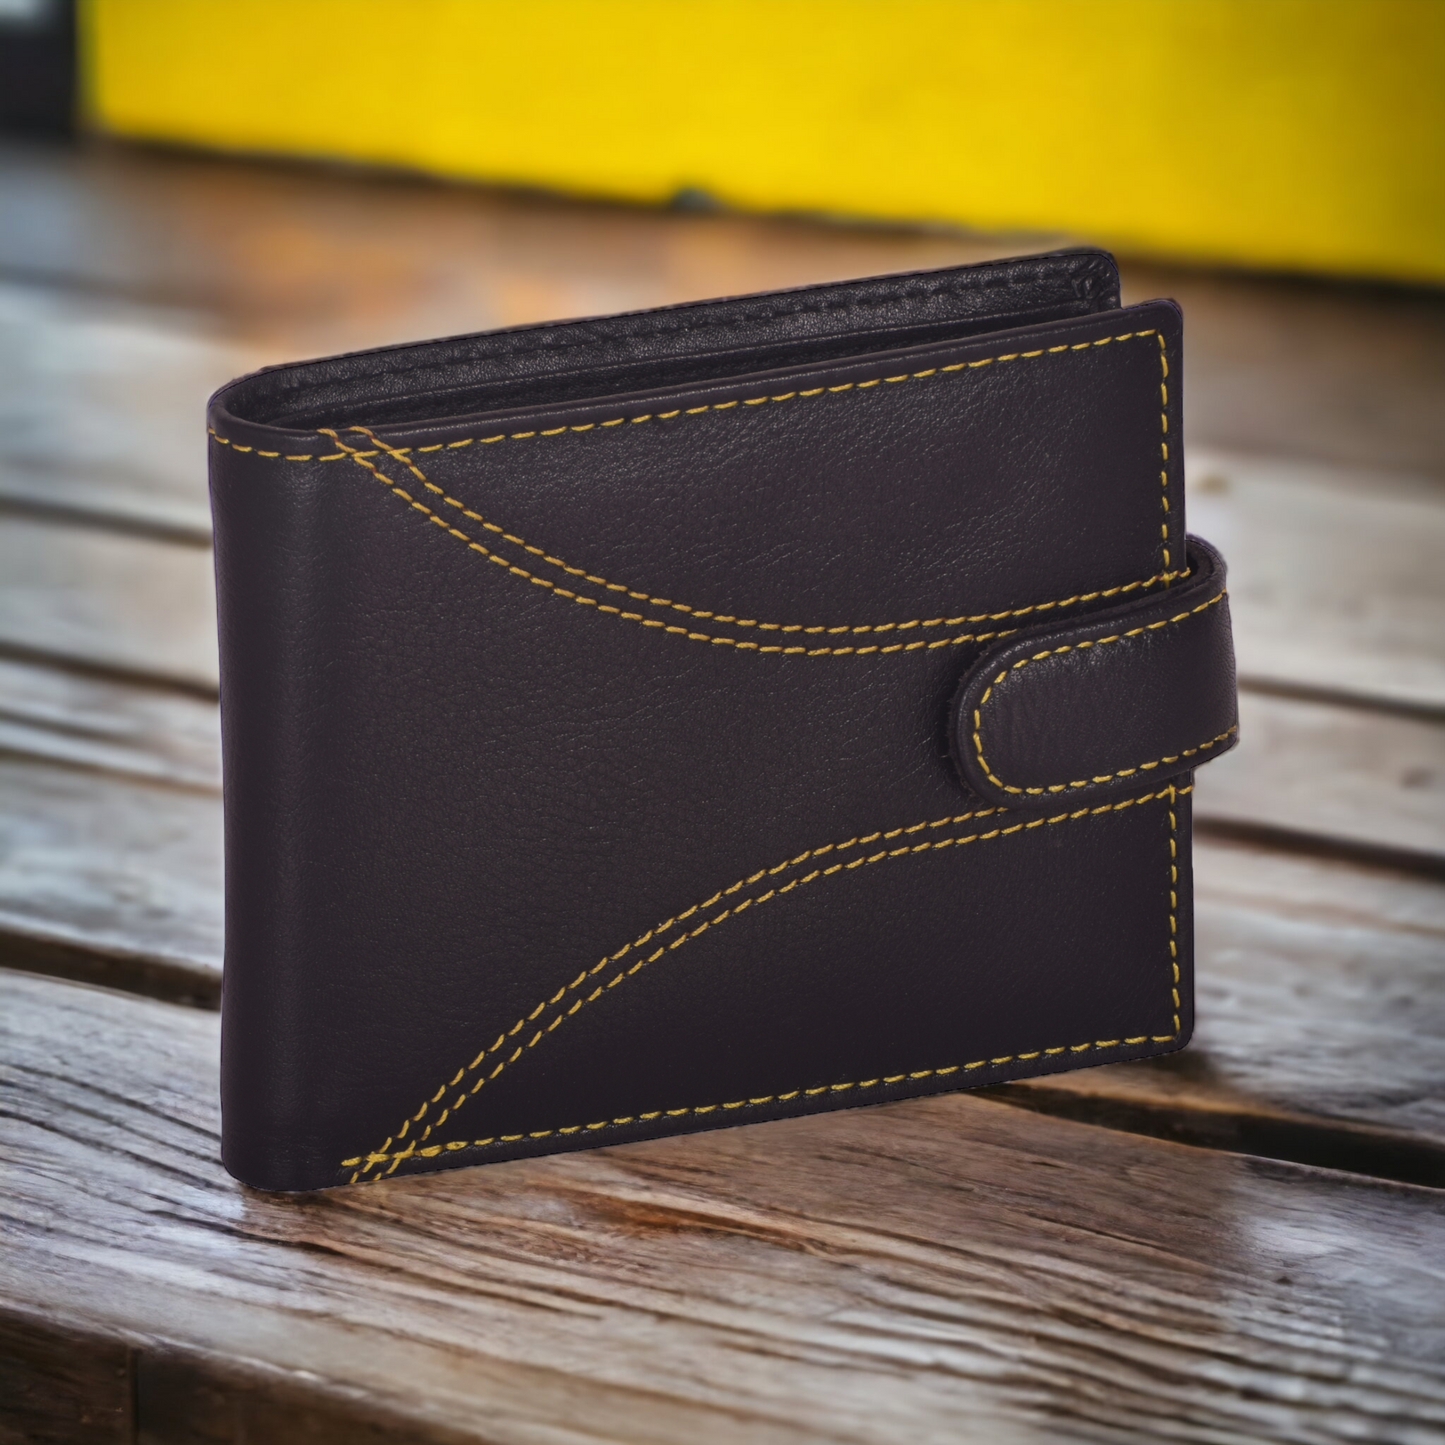 Premium Quality Leather Wallet for Men | RFID Wallet | Gift for Men